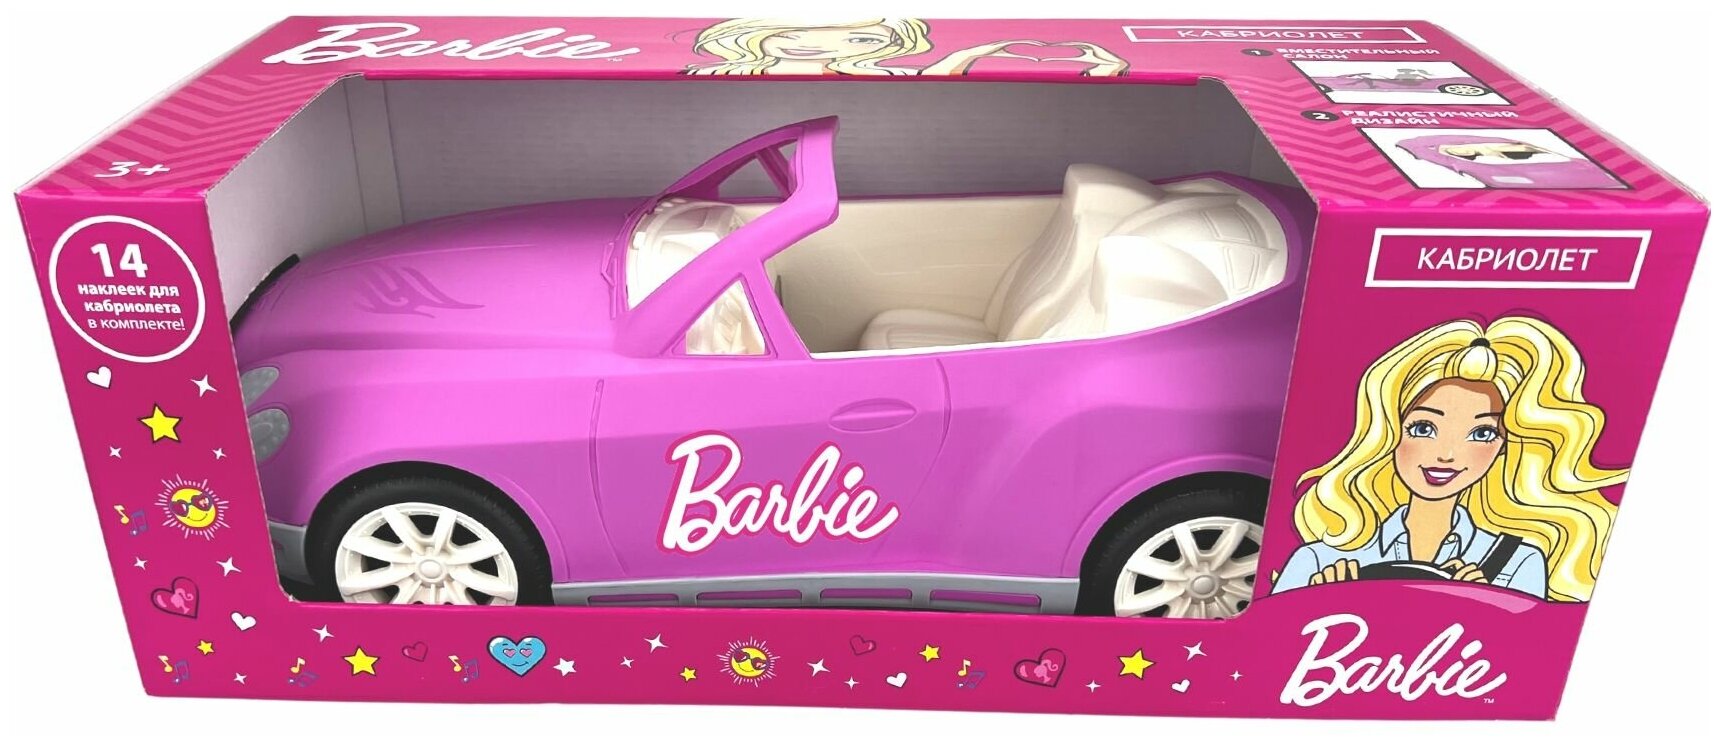 Машинка для куклы, Кабриолет Нимфа в коробке , розовая , размер машины - 42 х 19,5 х 15 см